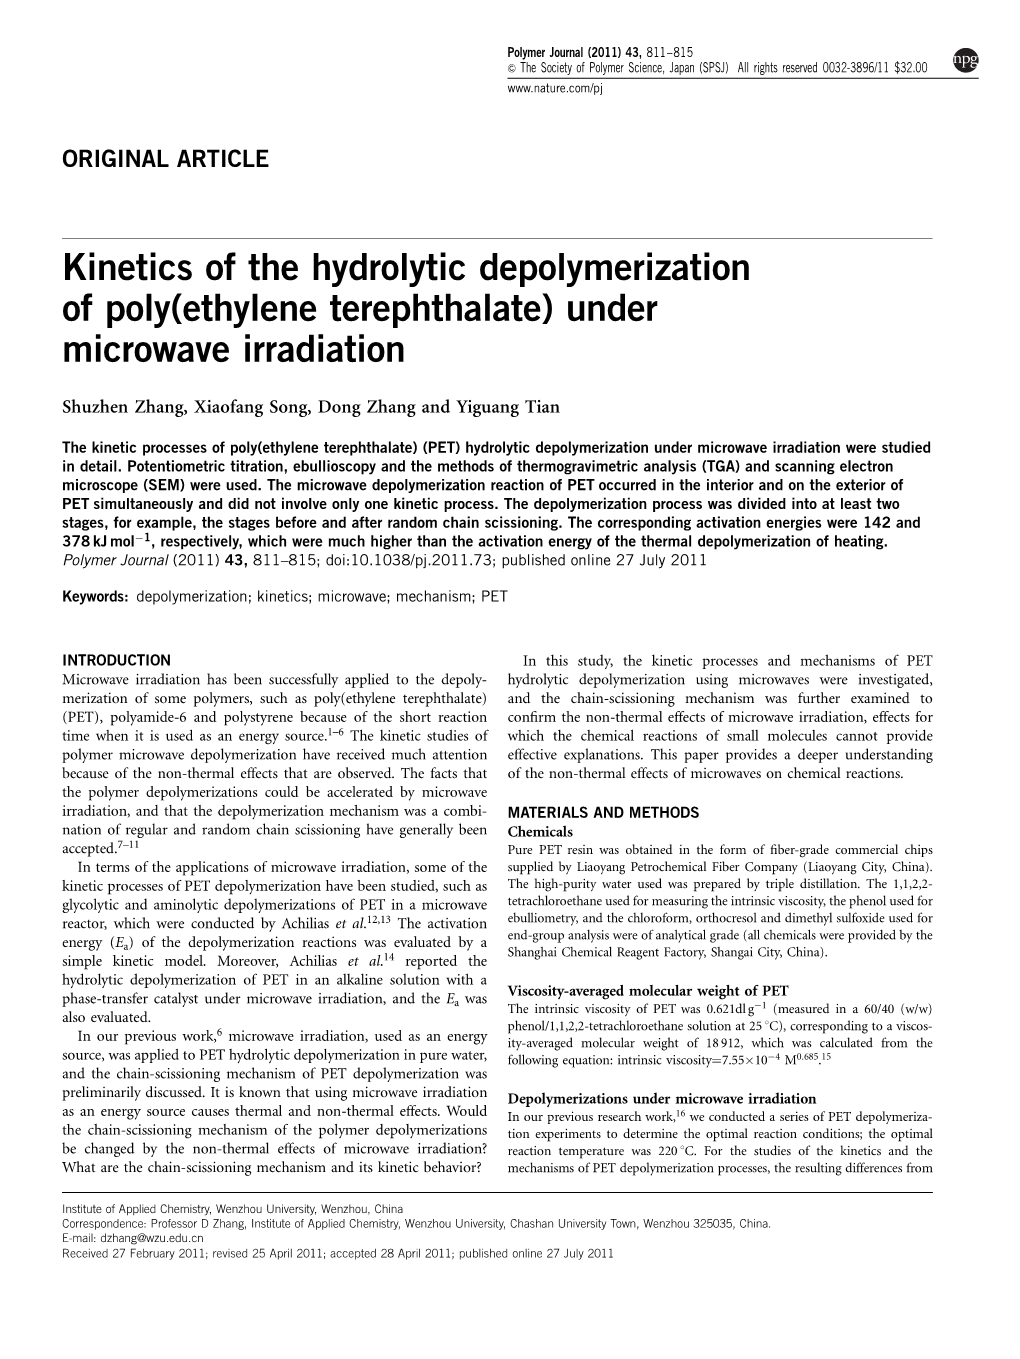 Kinetics of the Hydrolytic Depolymerization of Poly(Ethylene Terephthalate) Under Microwave Irradiation